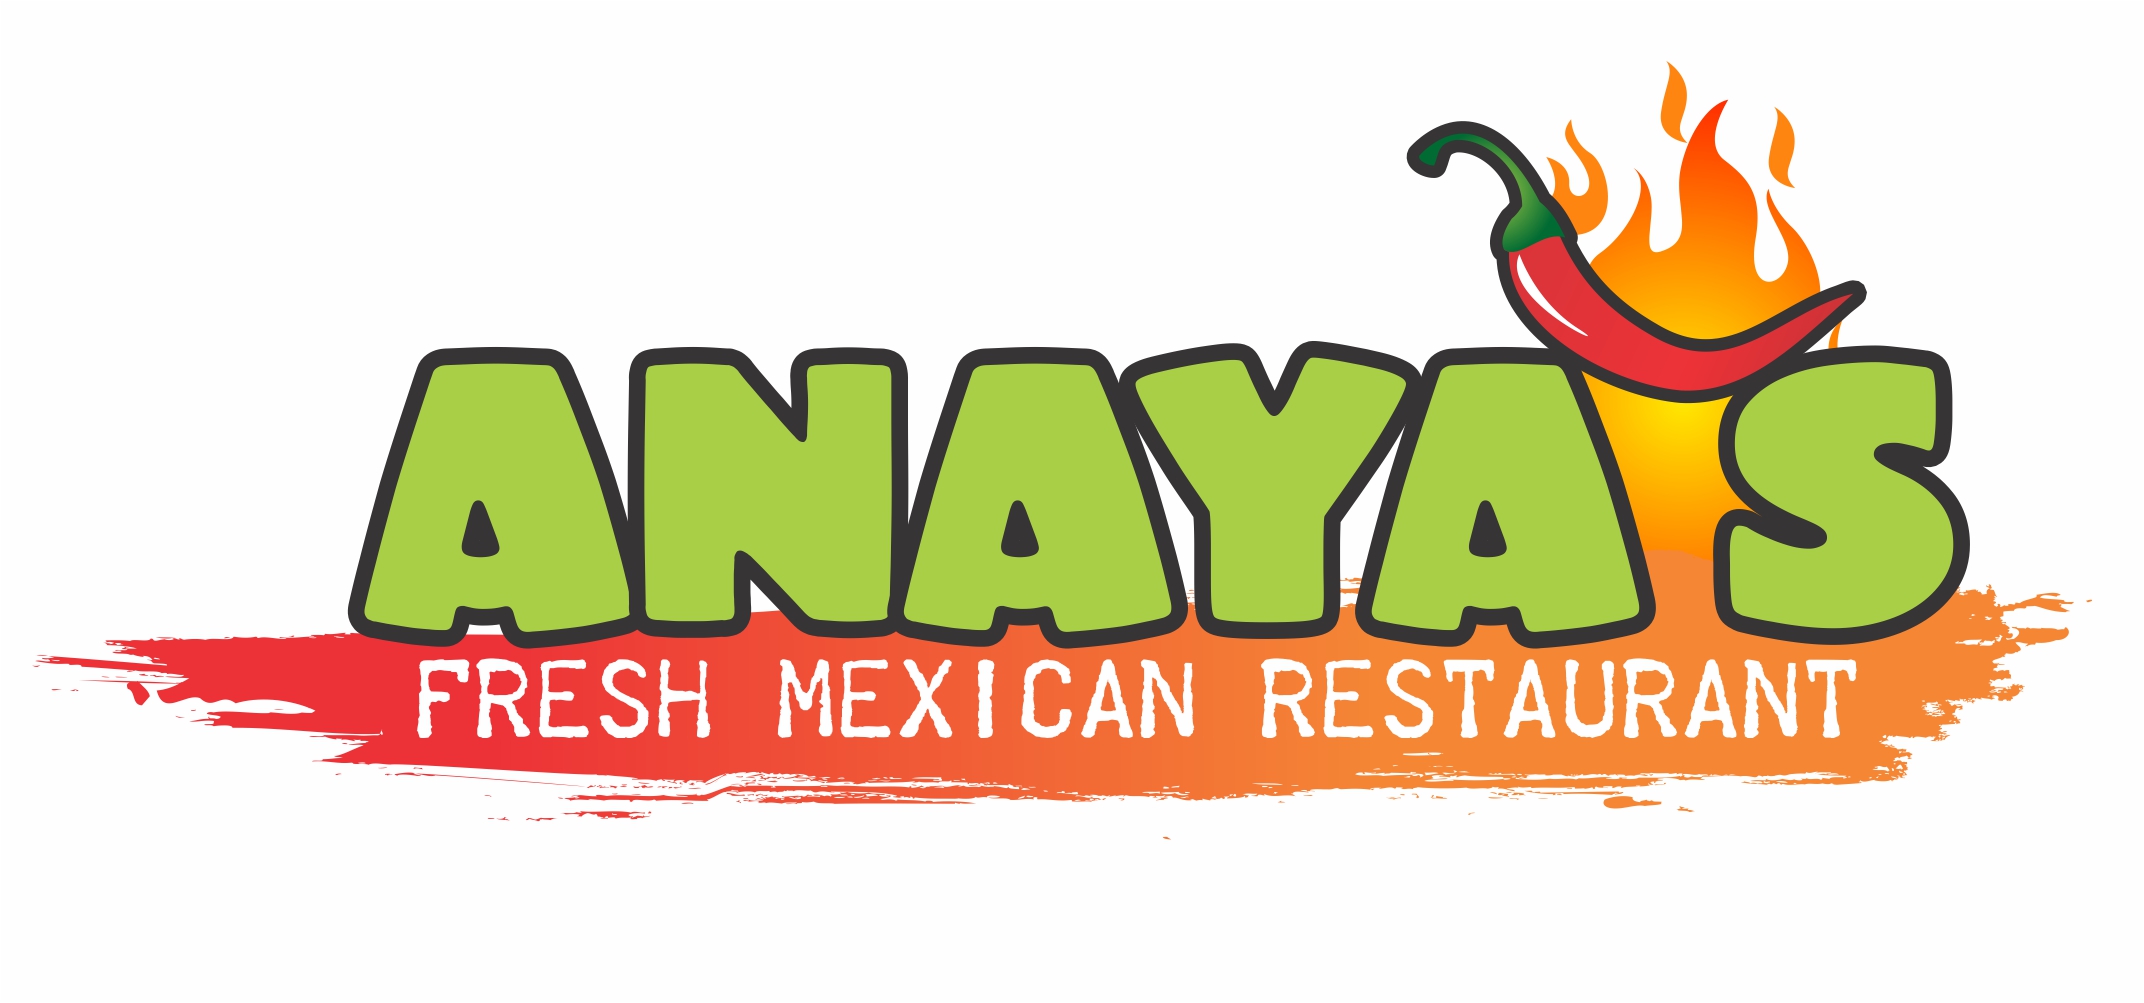 Anaya’s Fresh Mexican Restaurant has full bar